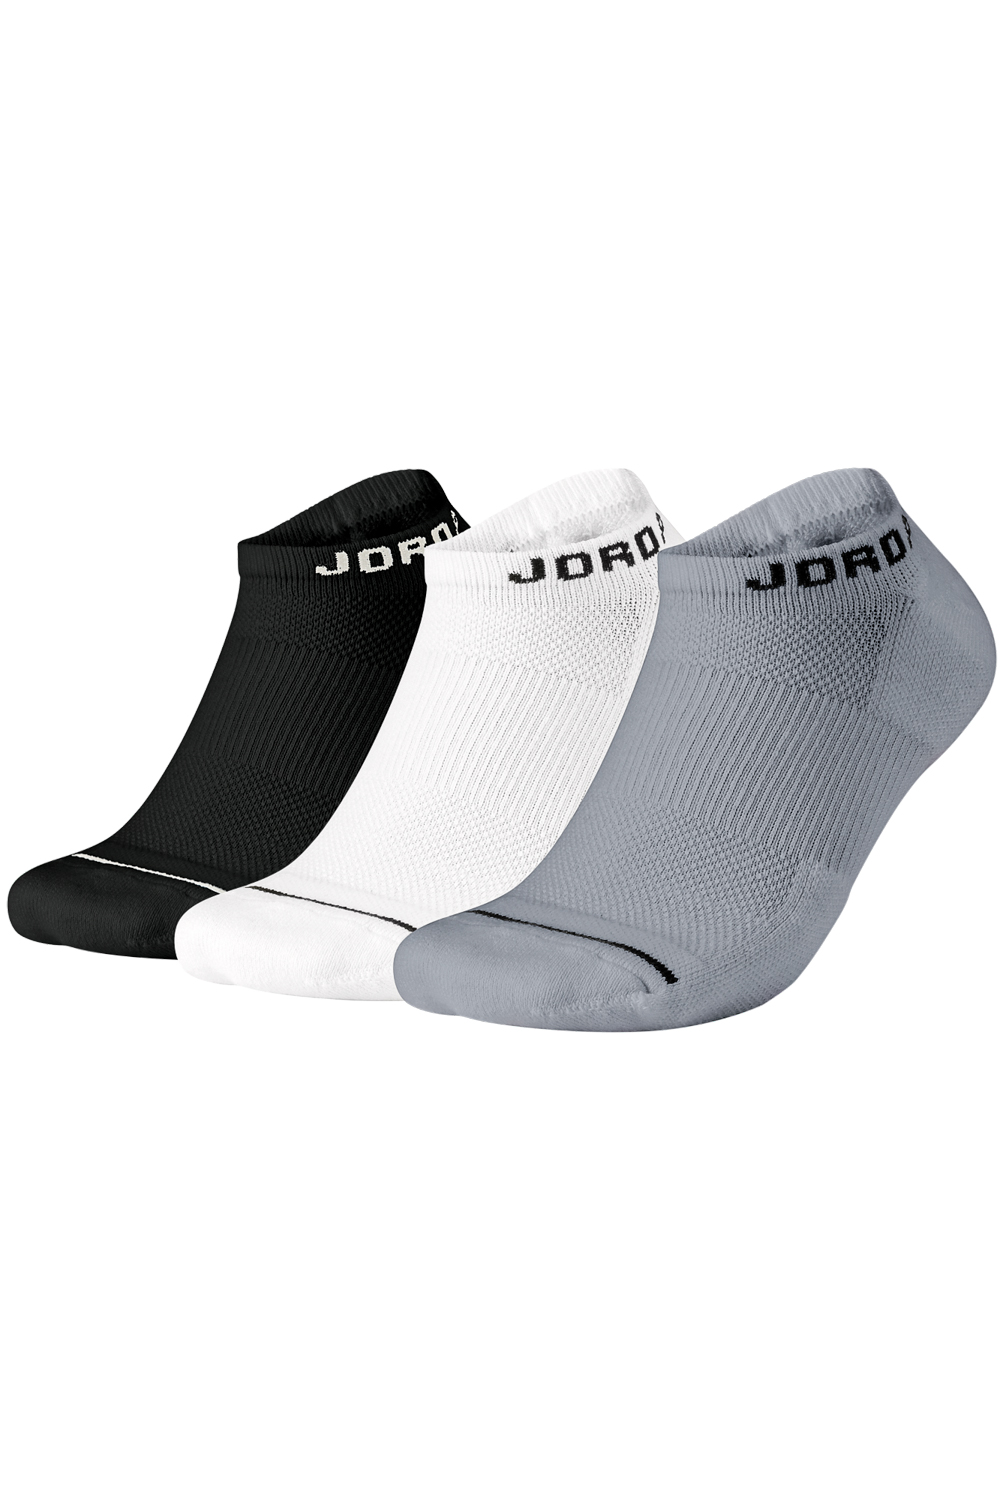 NIKE – Σετ unisex κάλτσες NIKE JORDAN EVRY MAX NS – 3PPK λευκές-μαύρες- γκρι 1514214.1-7192